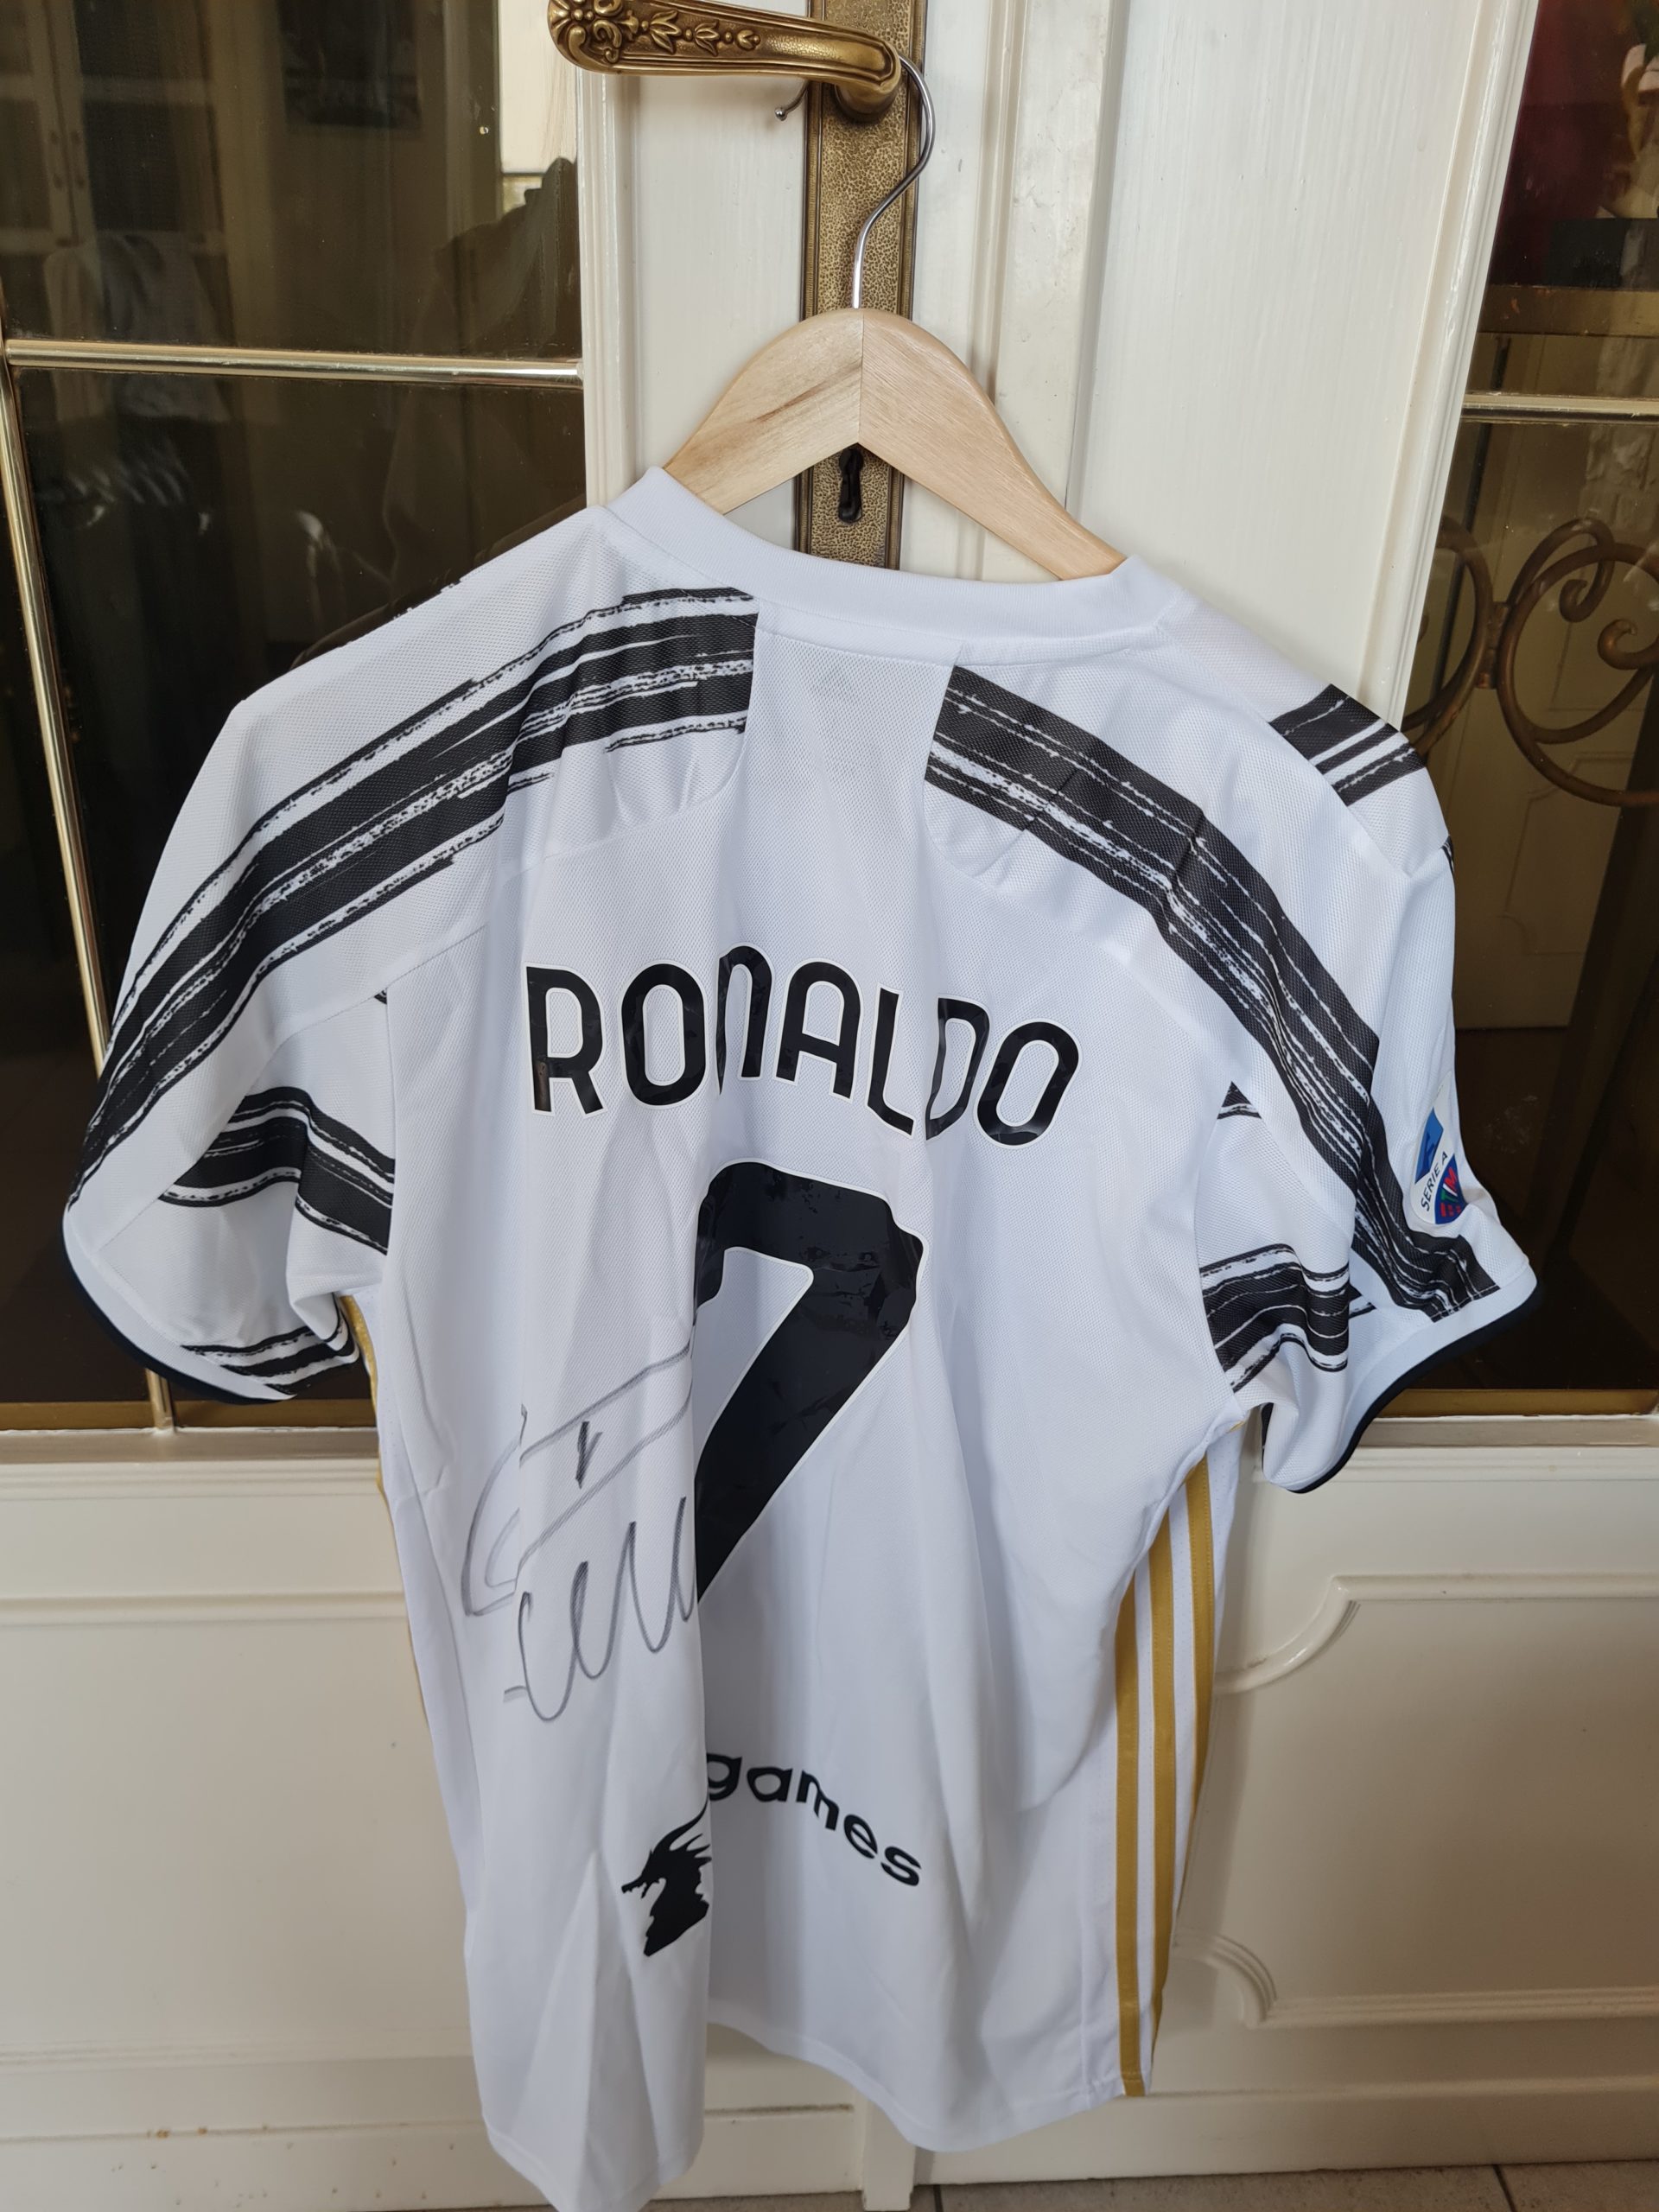 Juventus shirt signed by Cristiano Ronaldo